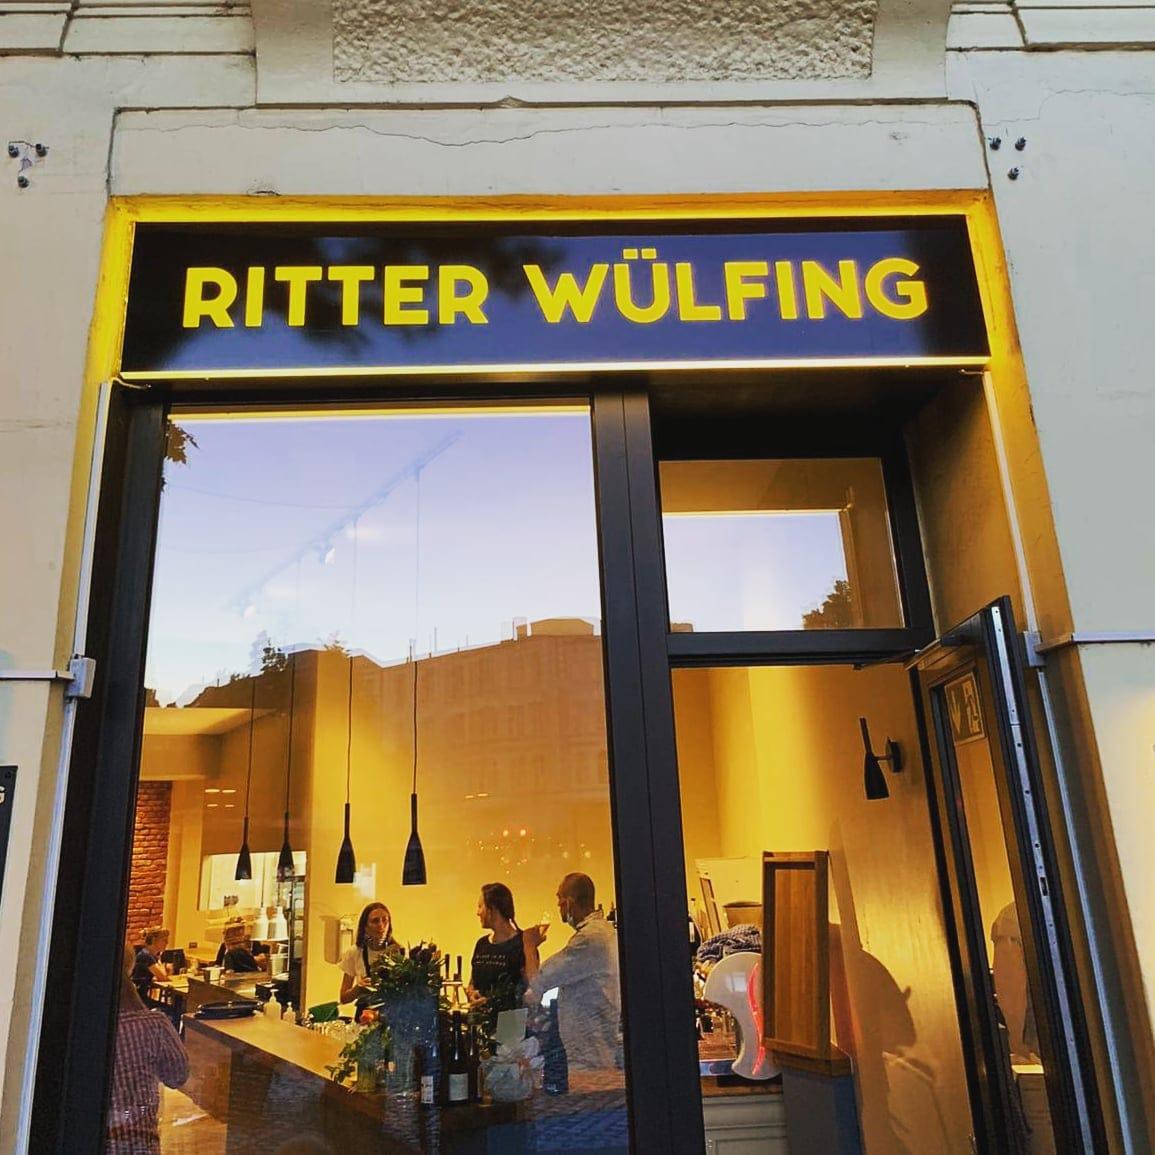 Restaurant "Ritter Wülfing" in Köln